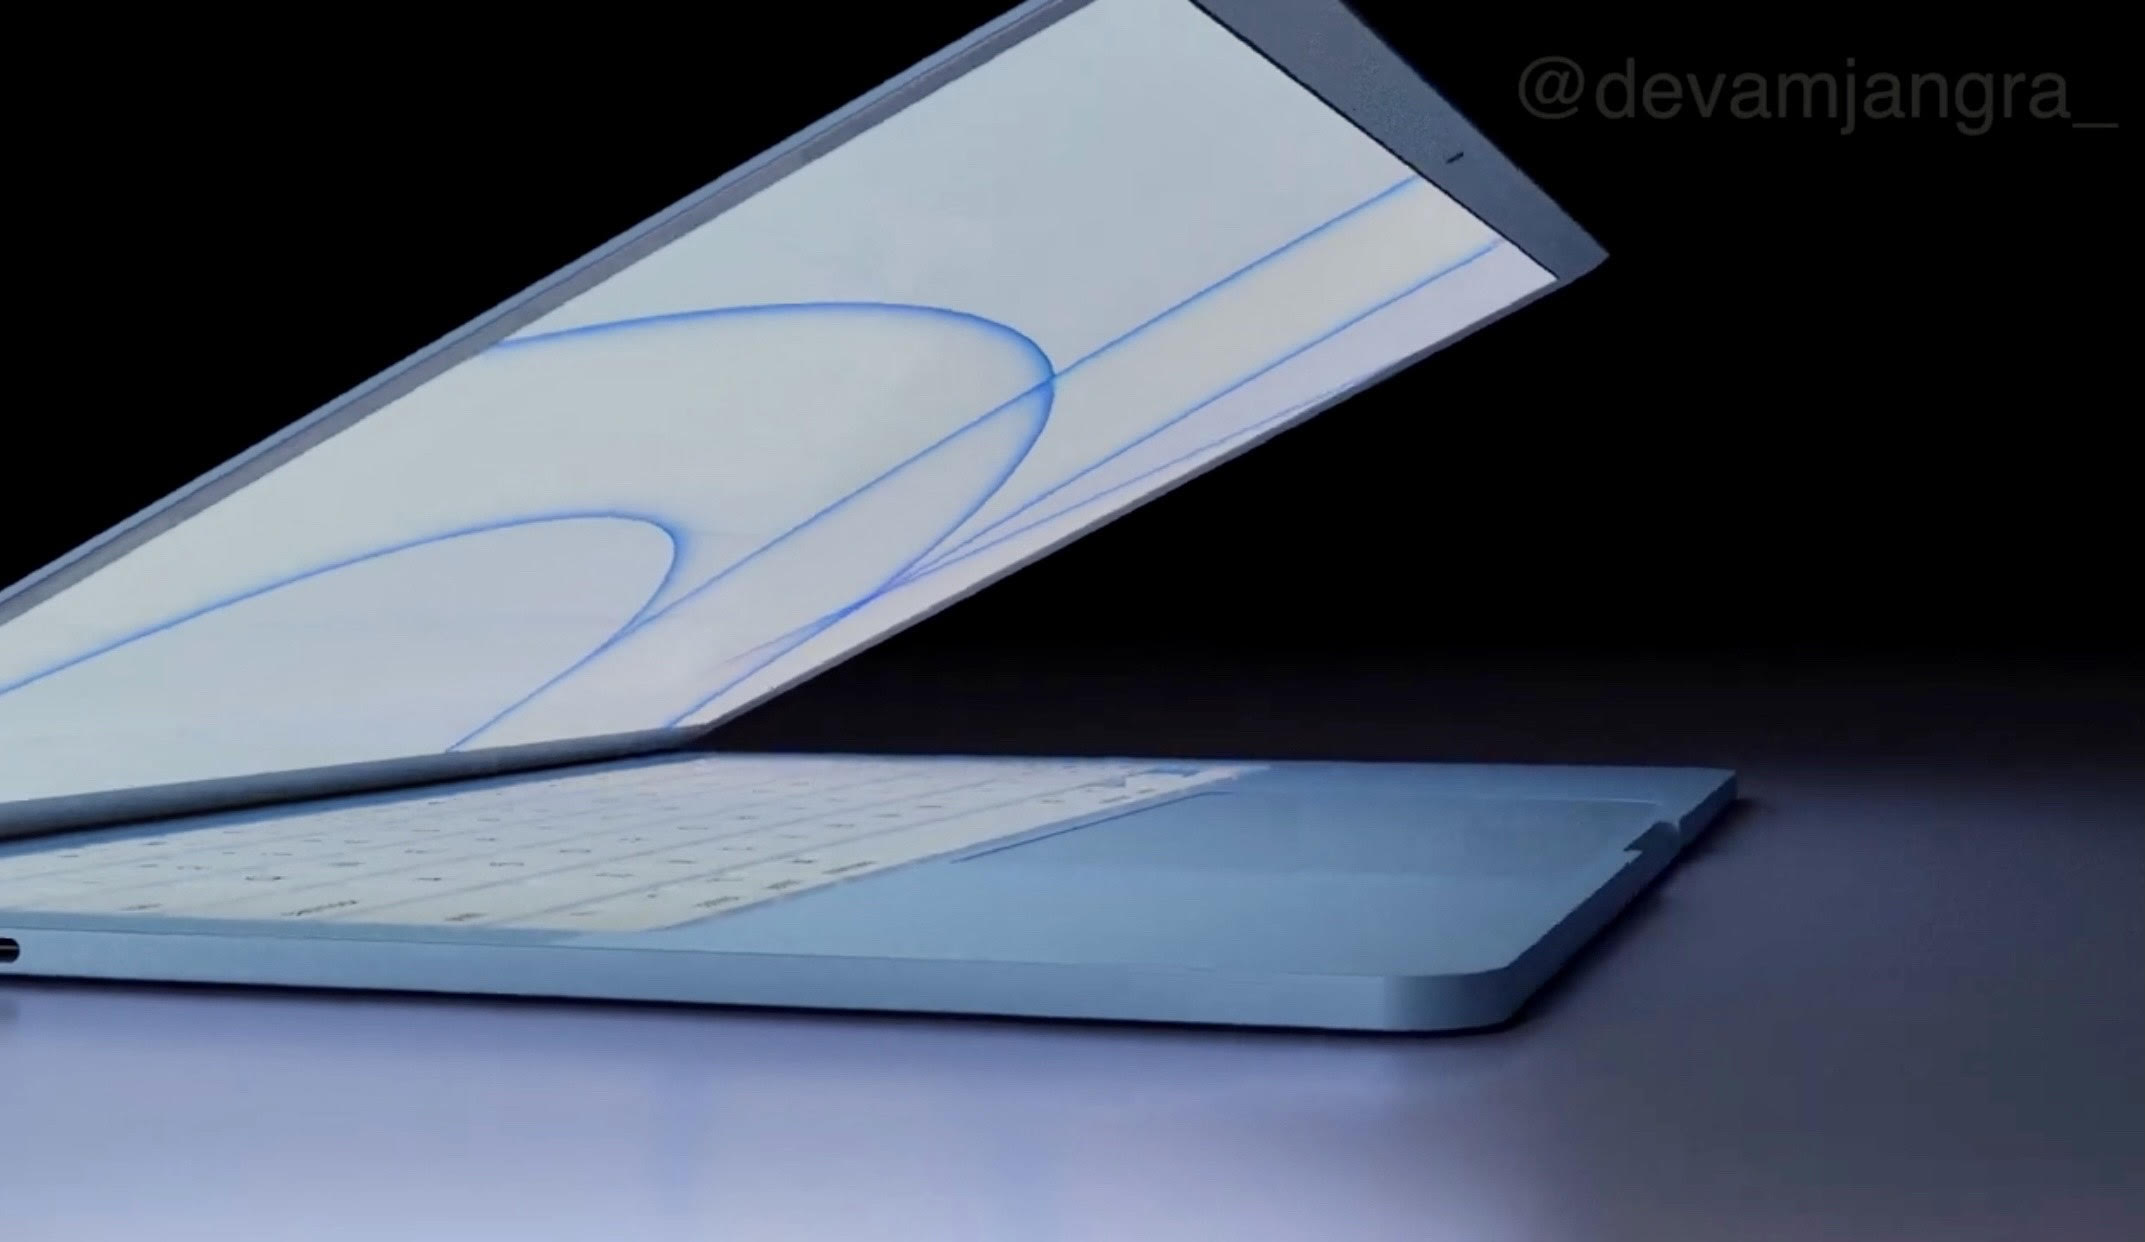 MacBook Air 2021 concept